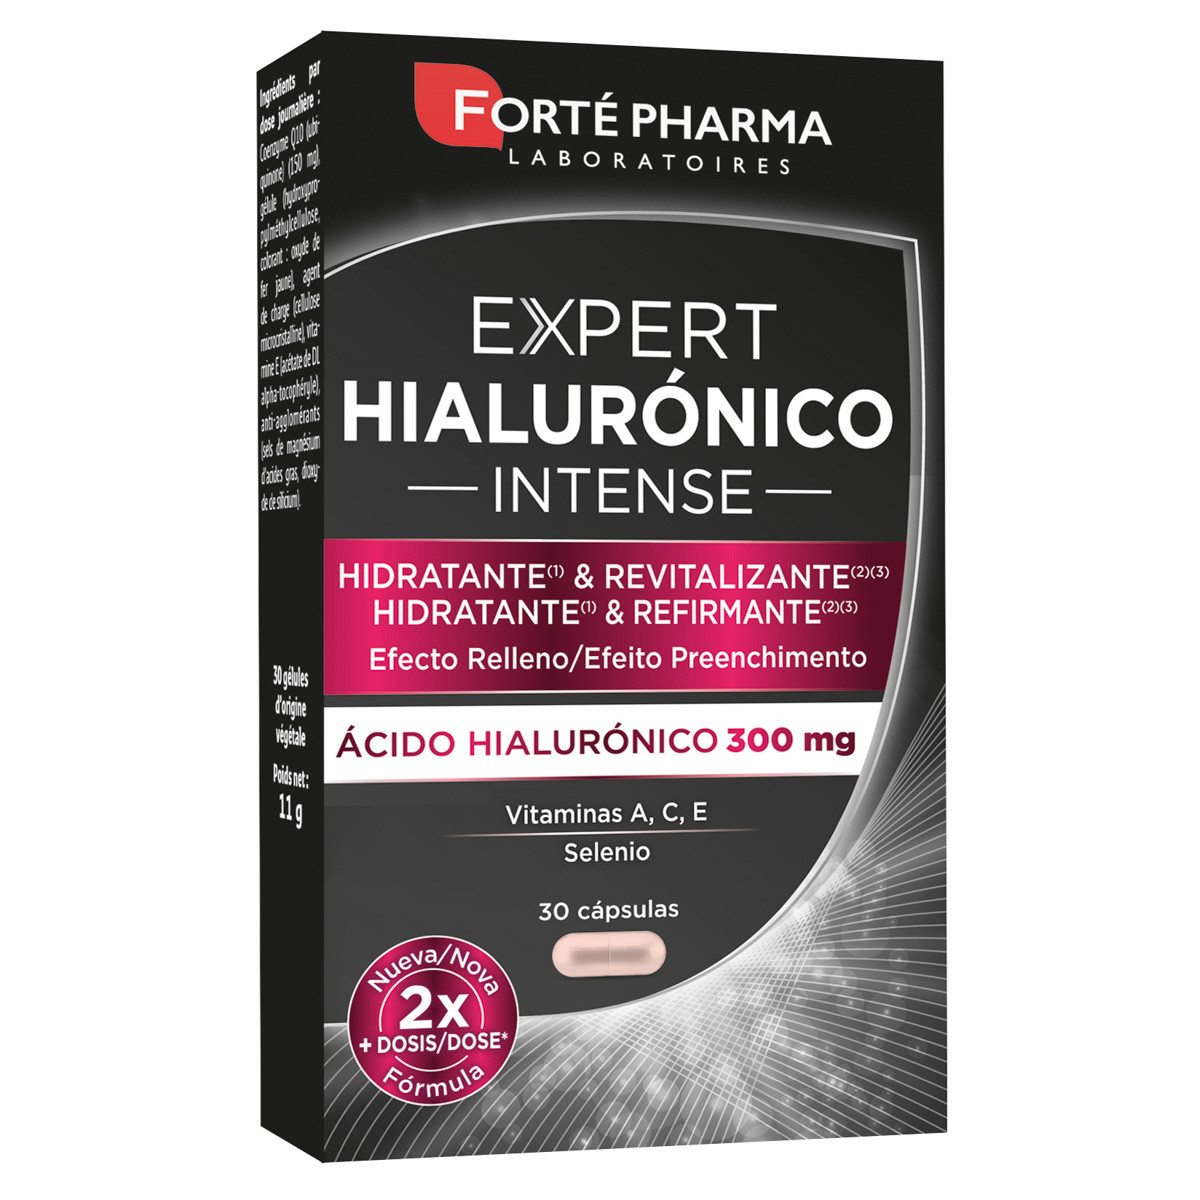 Imagen de Forte pharma expert hialuronico intense 30 capsulas